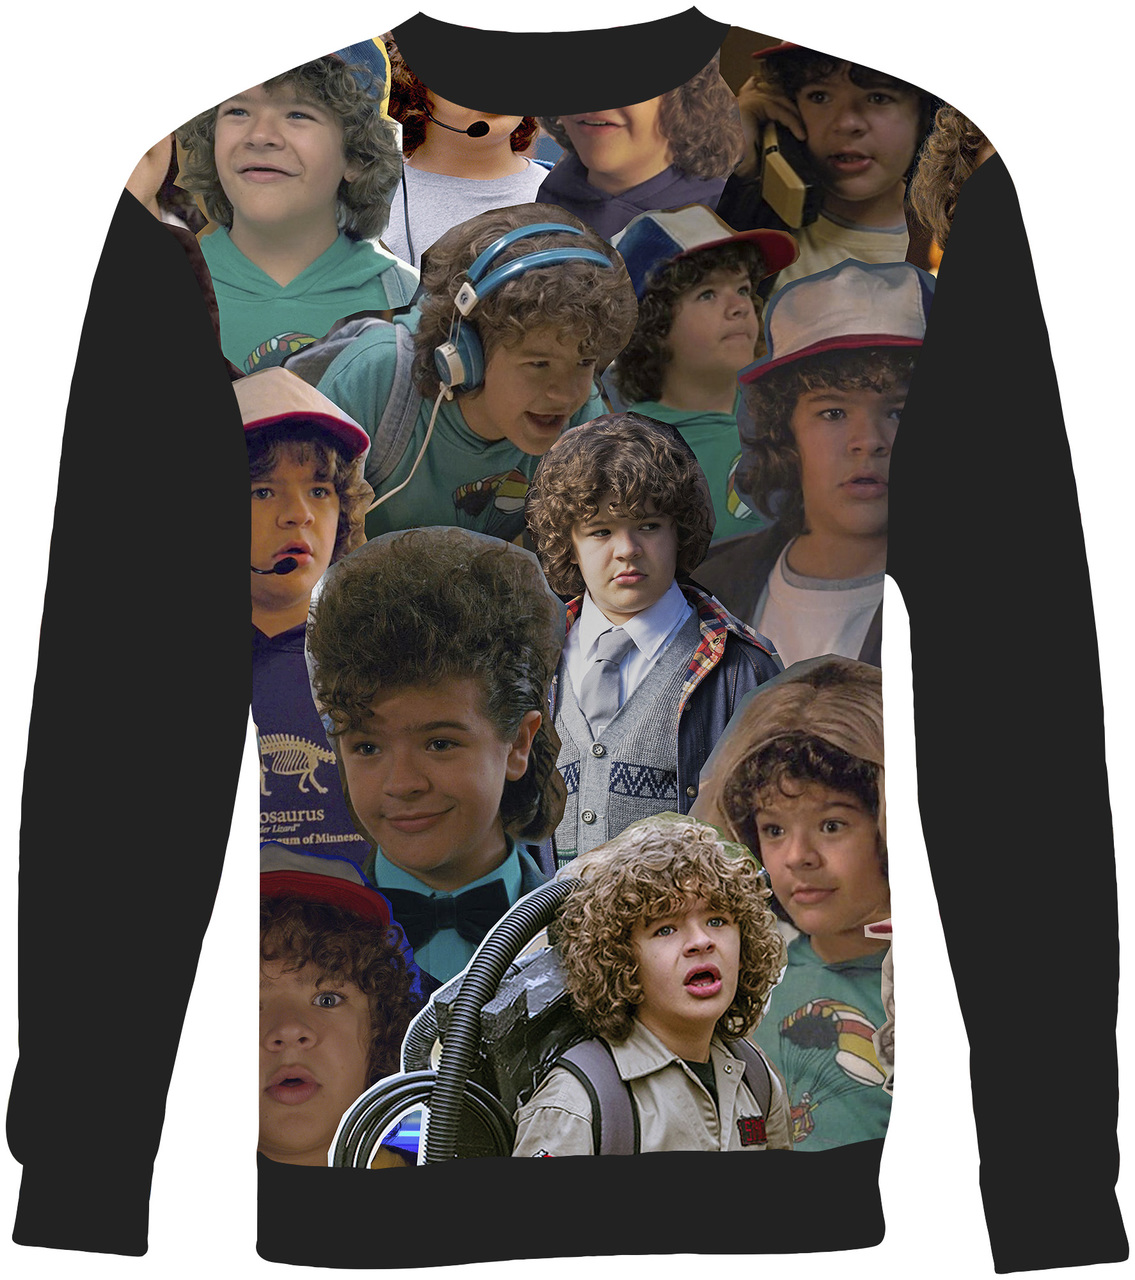 Dustin Stranger Things Collage Sweater Sweatshirt Subliworks